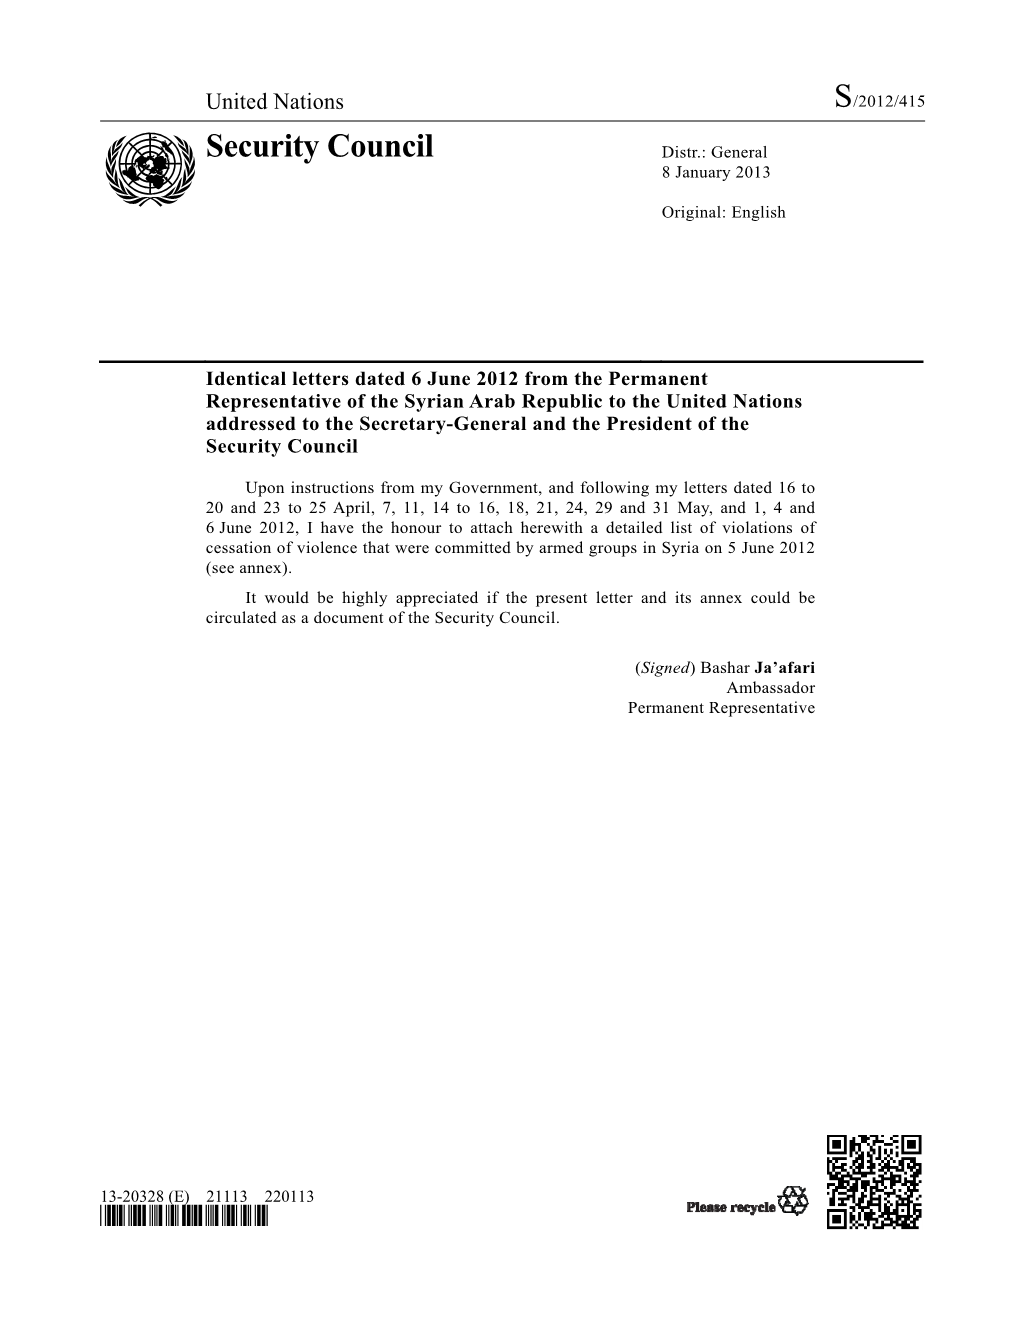 Security Council Distr.: General 8 January 2013